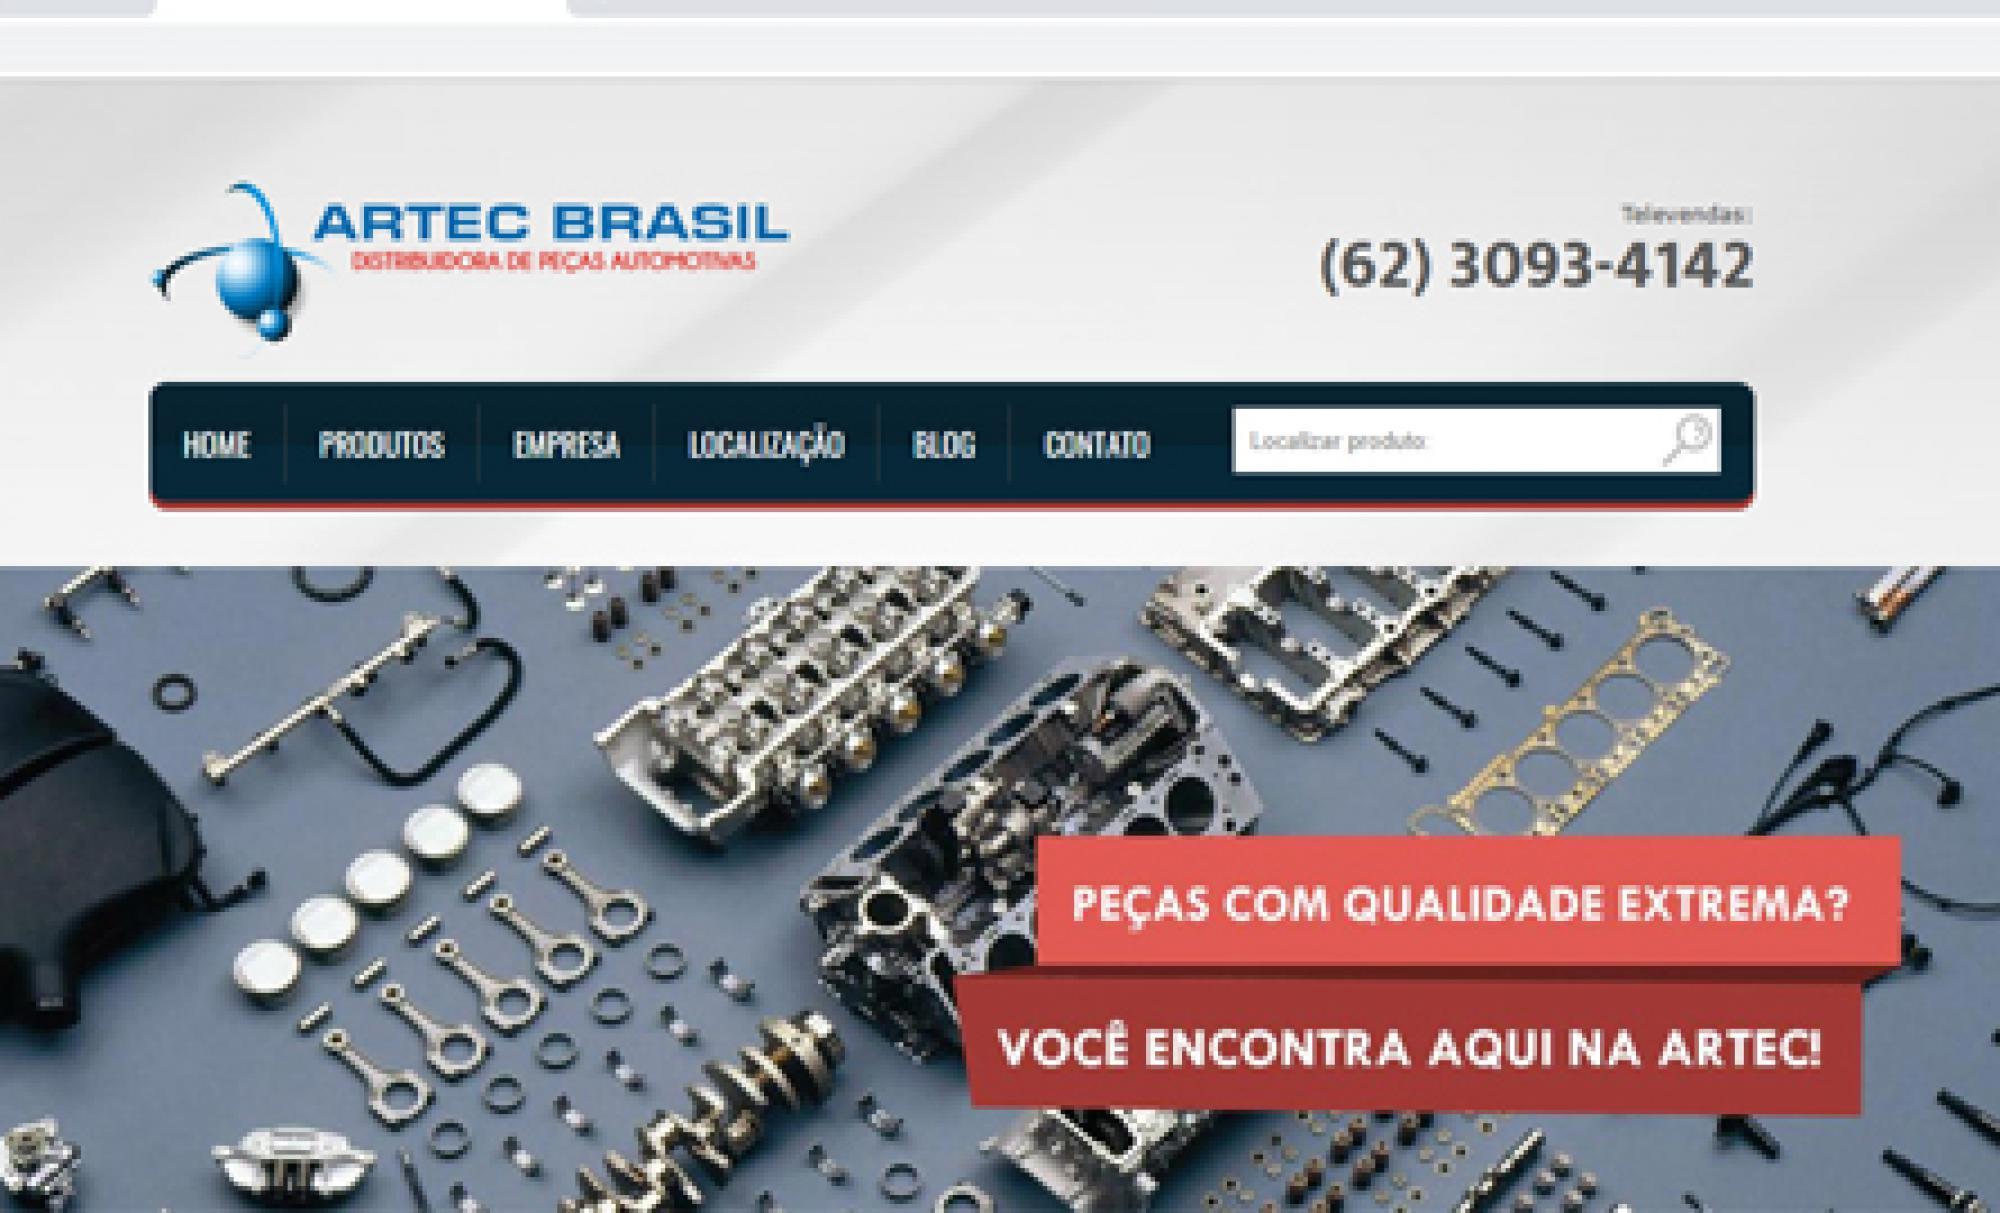 Desenvolvimento de Site Artec Brasil - AsWeb